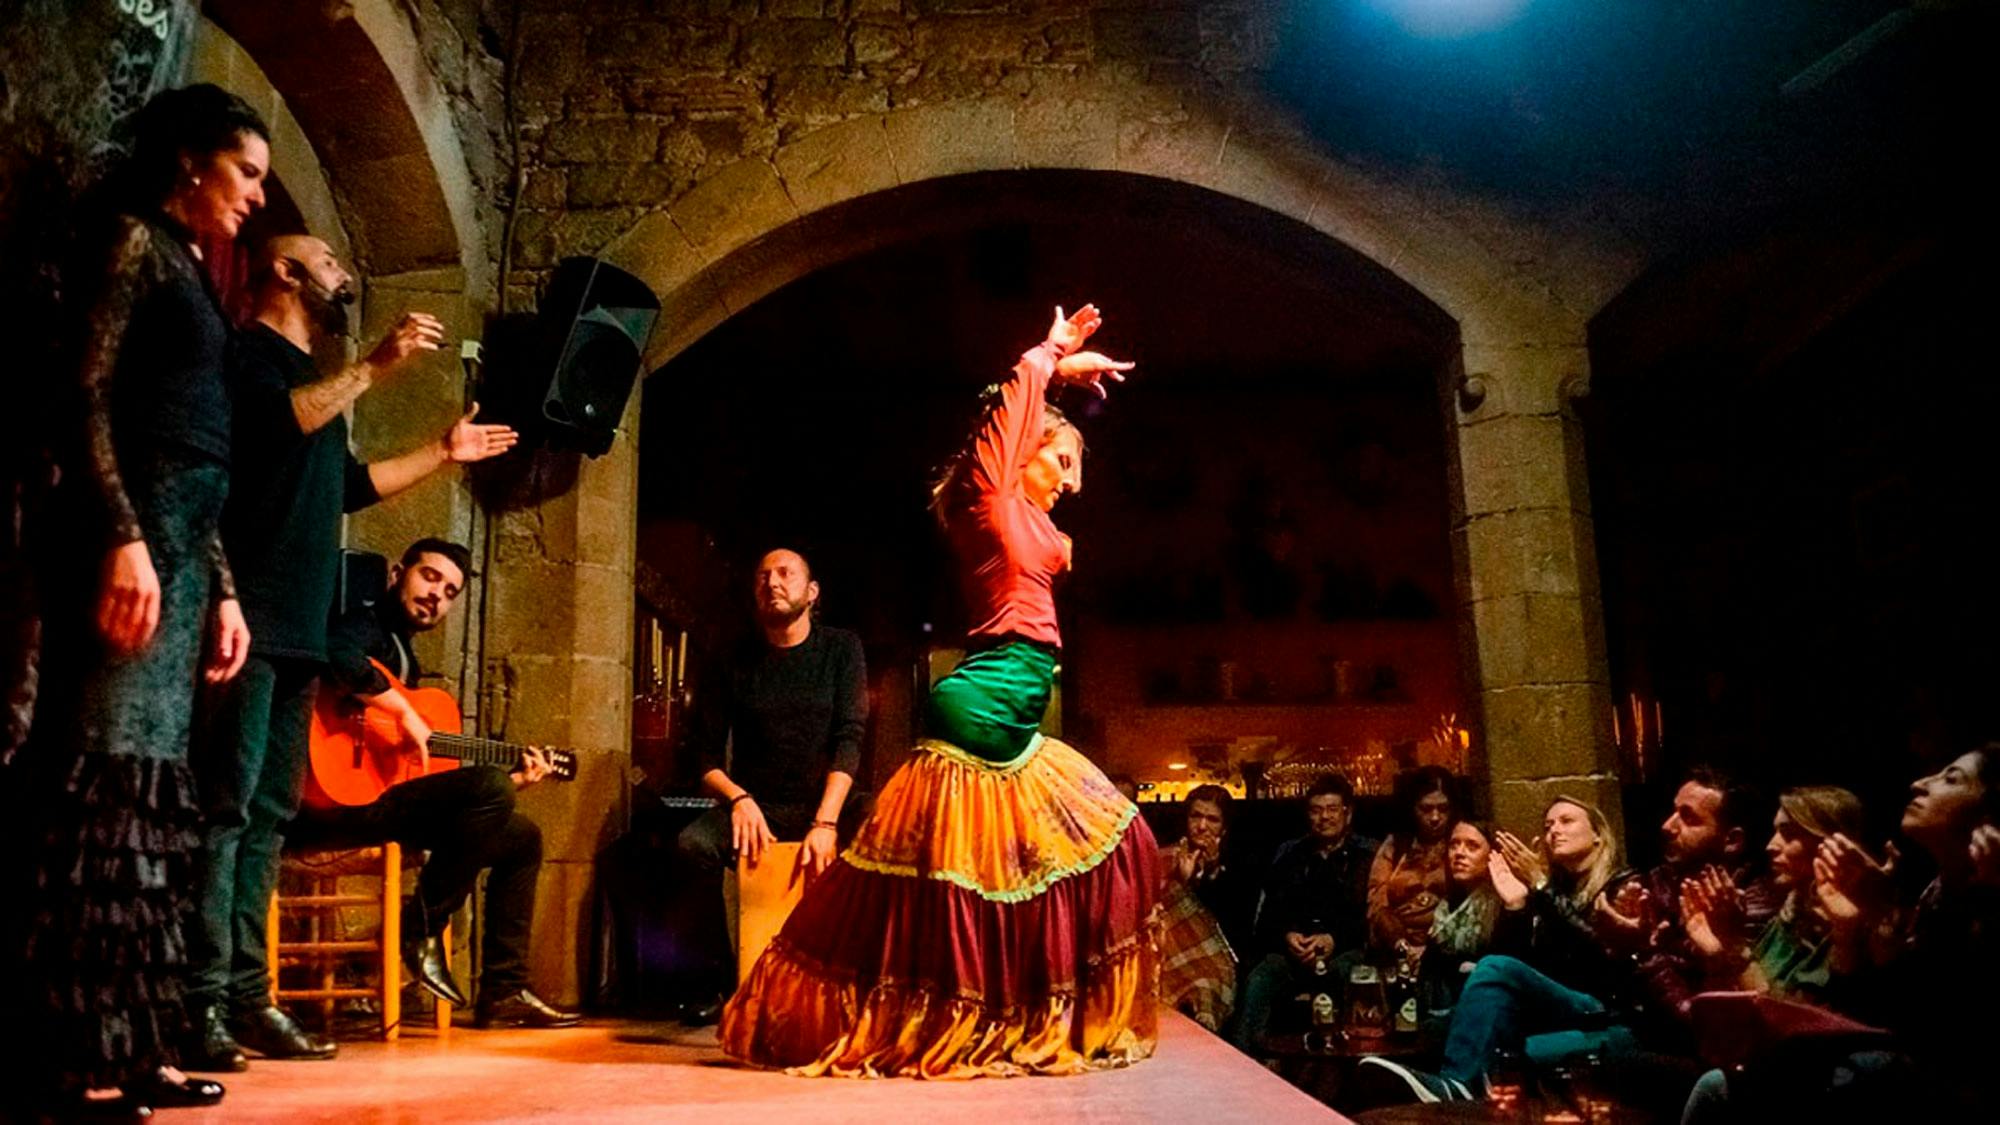 Altstadtrundgang durch Barcelona mit Flamenco-Show und Tapas